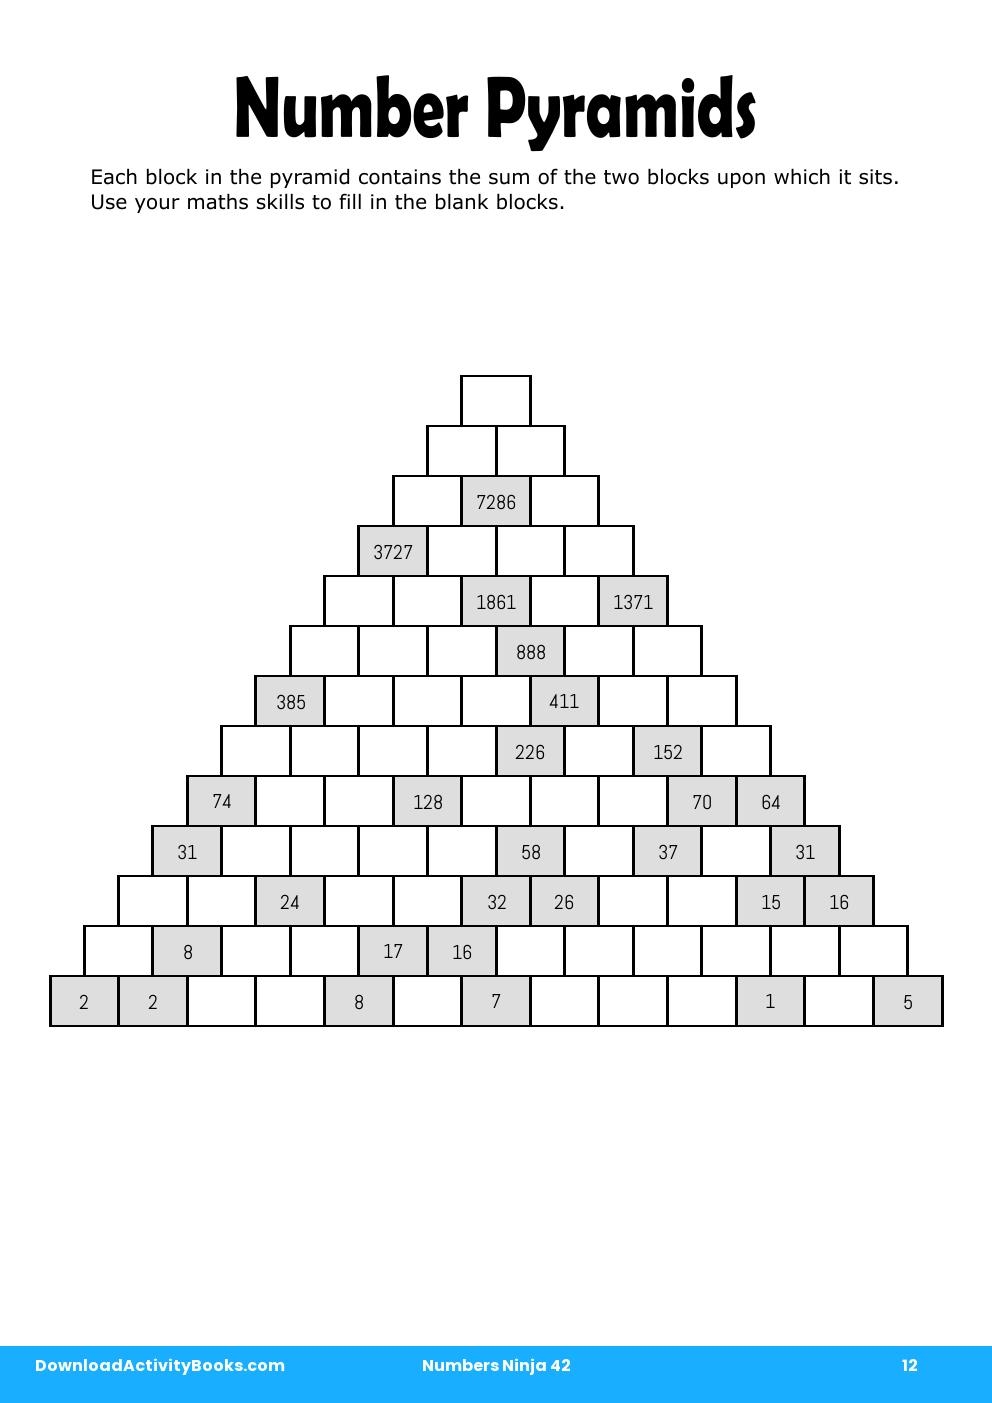 Number Pyramids in Numbers Ninja 42